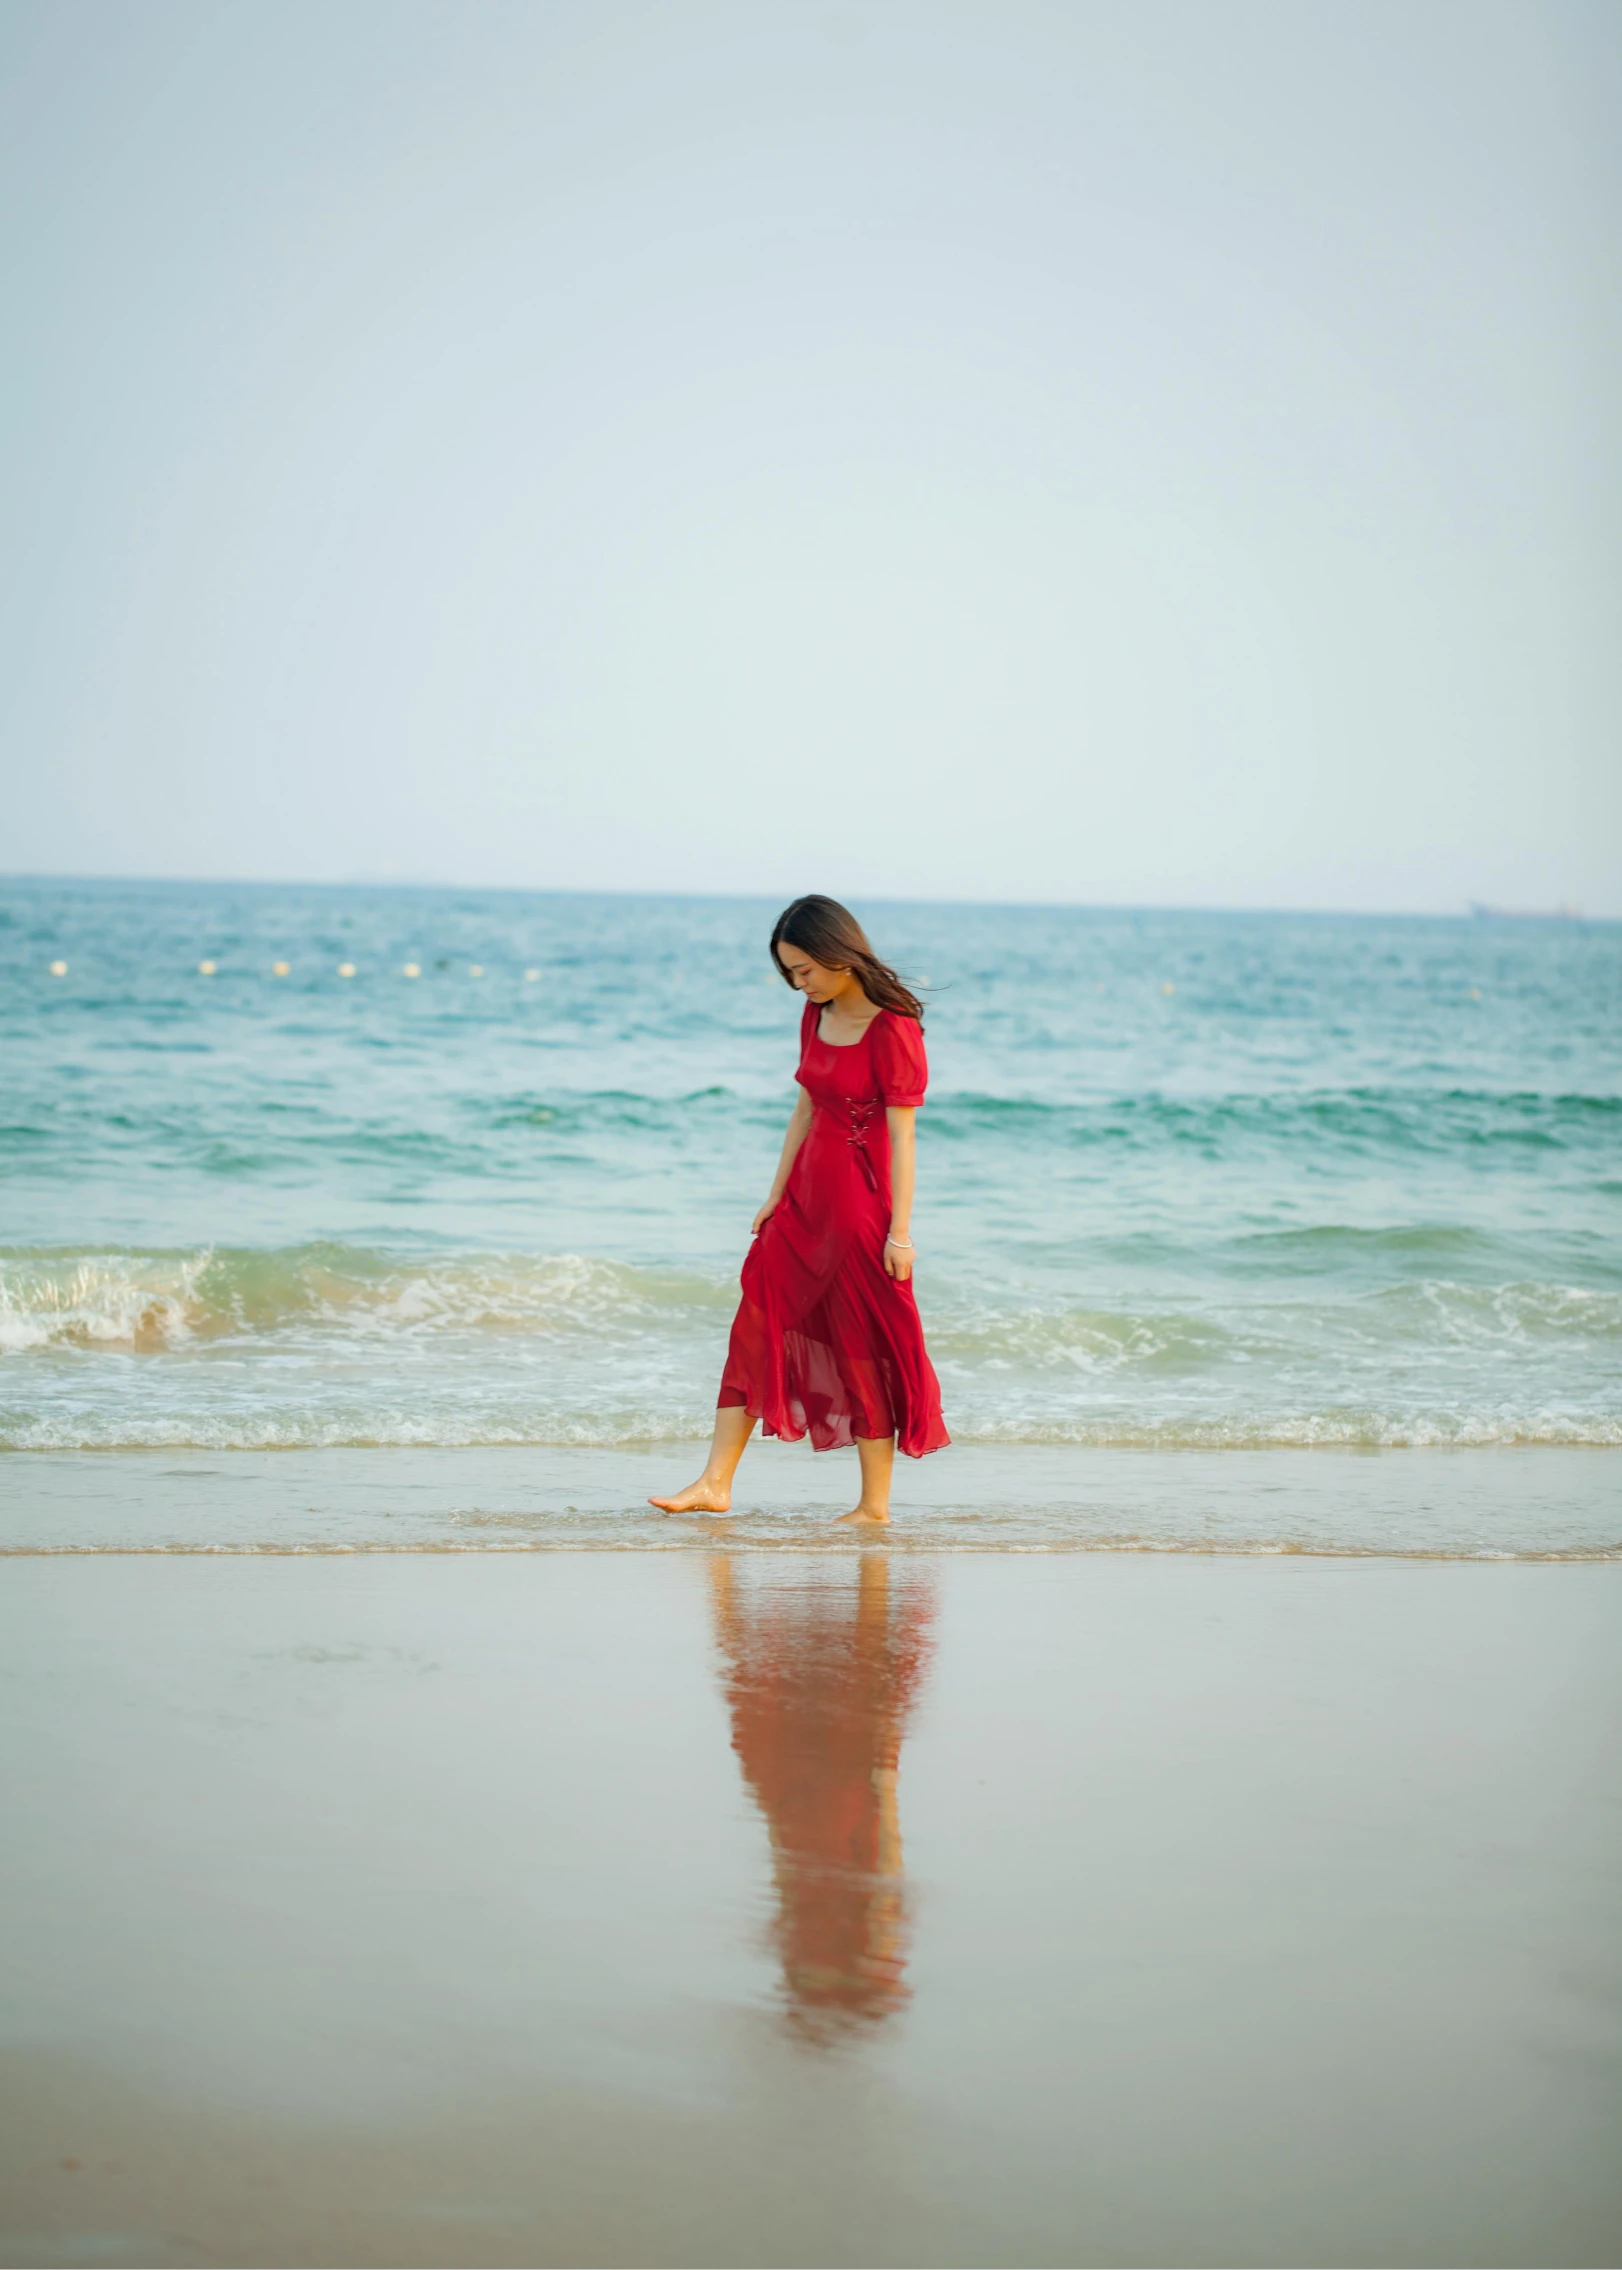 a woman in a red dress walking on the beach, pexels contest winner, bae suzy, wavy, 15081959 21121991 01012000 4k, medium format. soft light